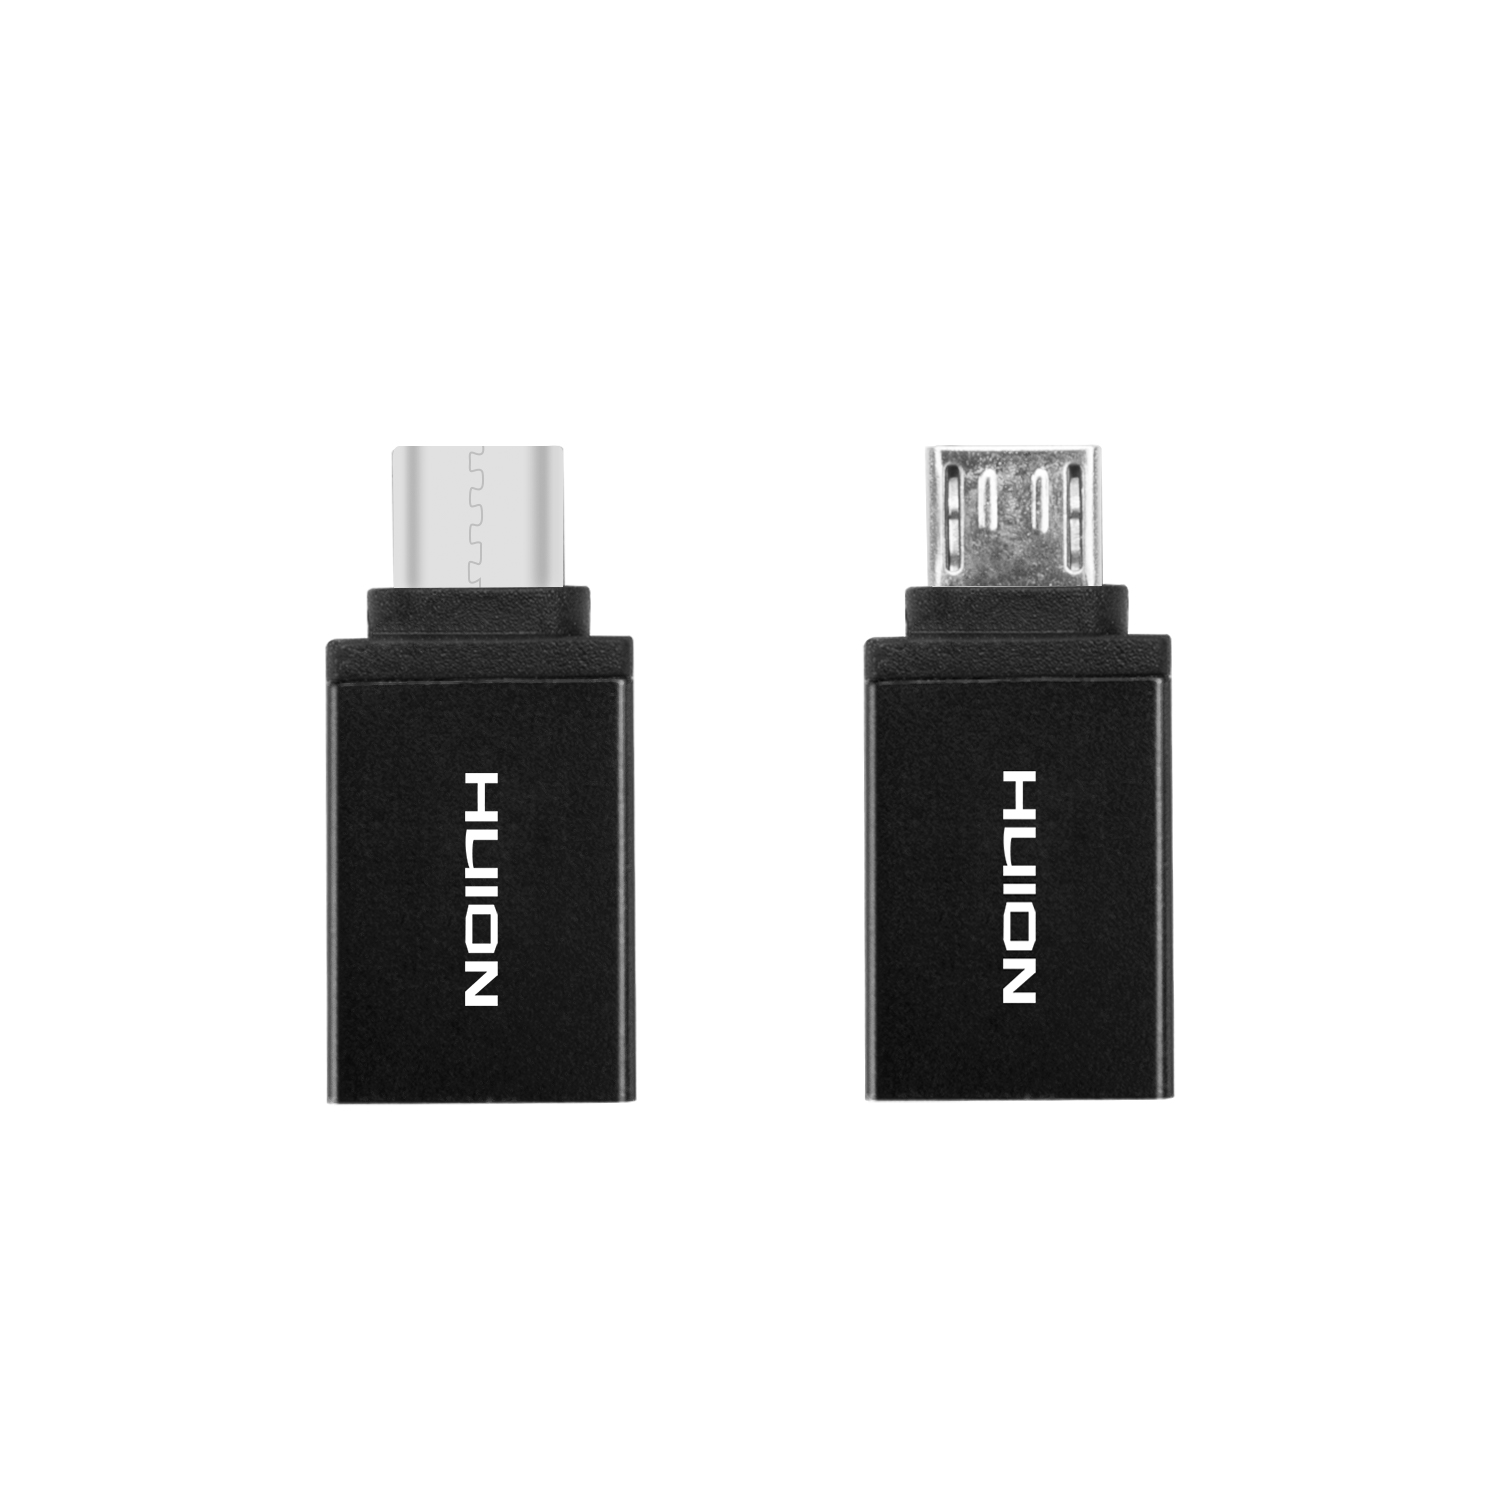 OTG Adapter Micro USB Typ B Stecker für Tablet 2.0 USB Stick Pad Maus Handy  Z104